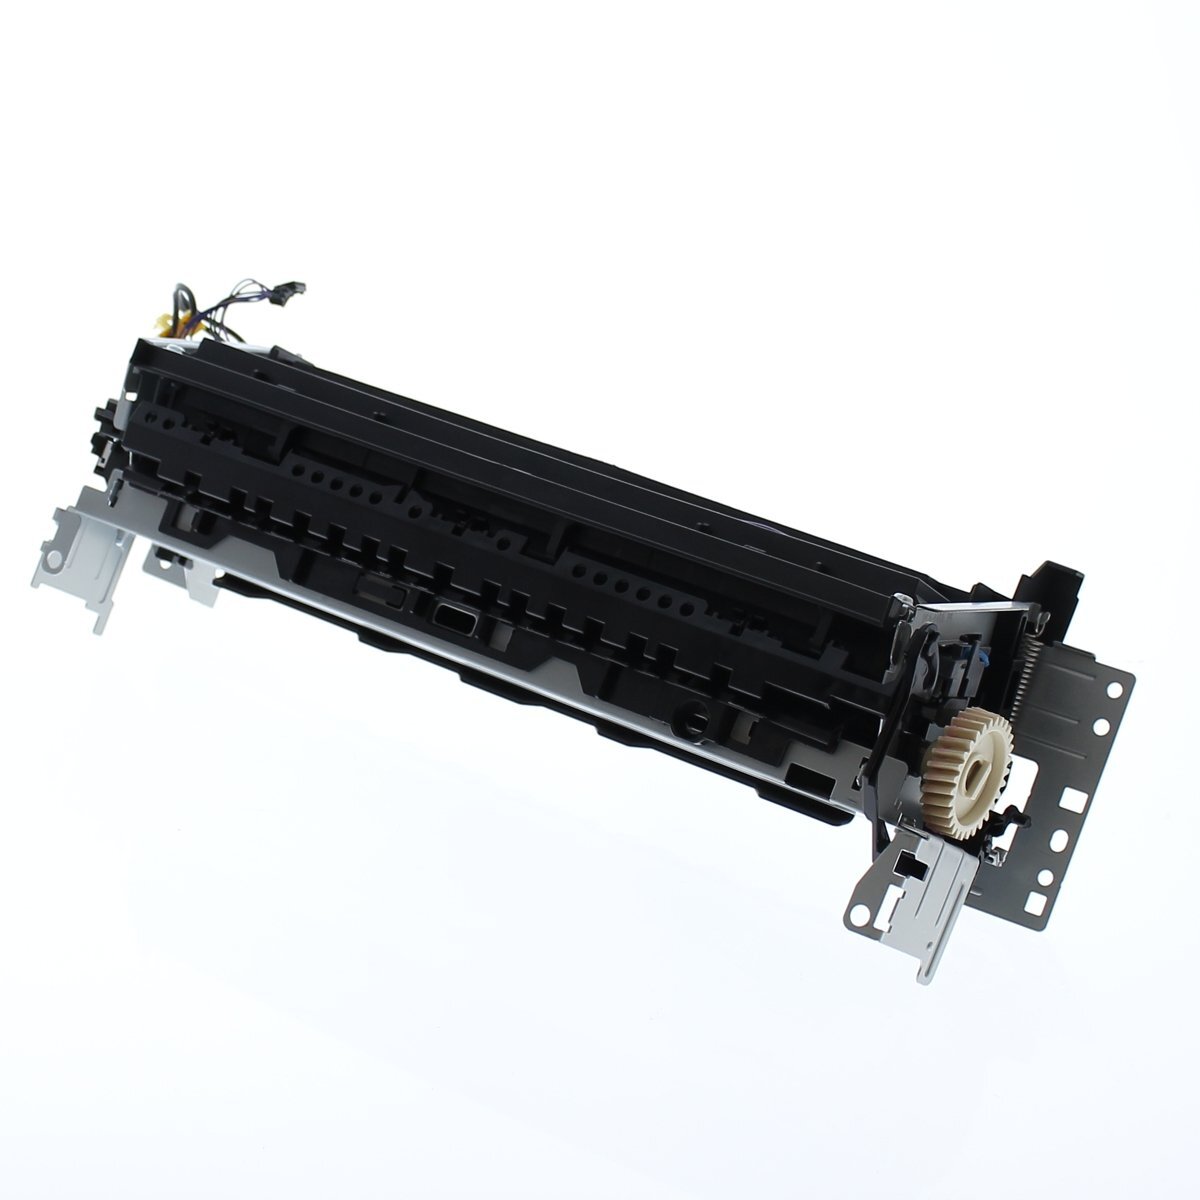 HP LaserJet Pro M402  M426  M427  M403 Printer Fuser Unit Assembly